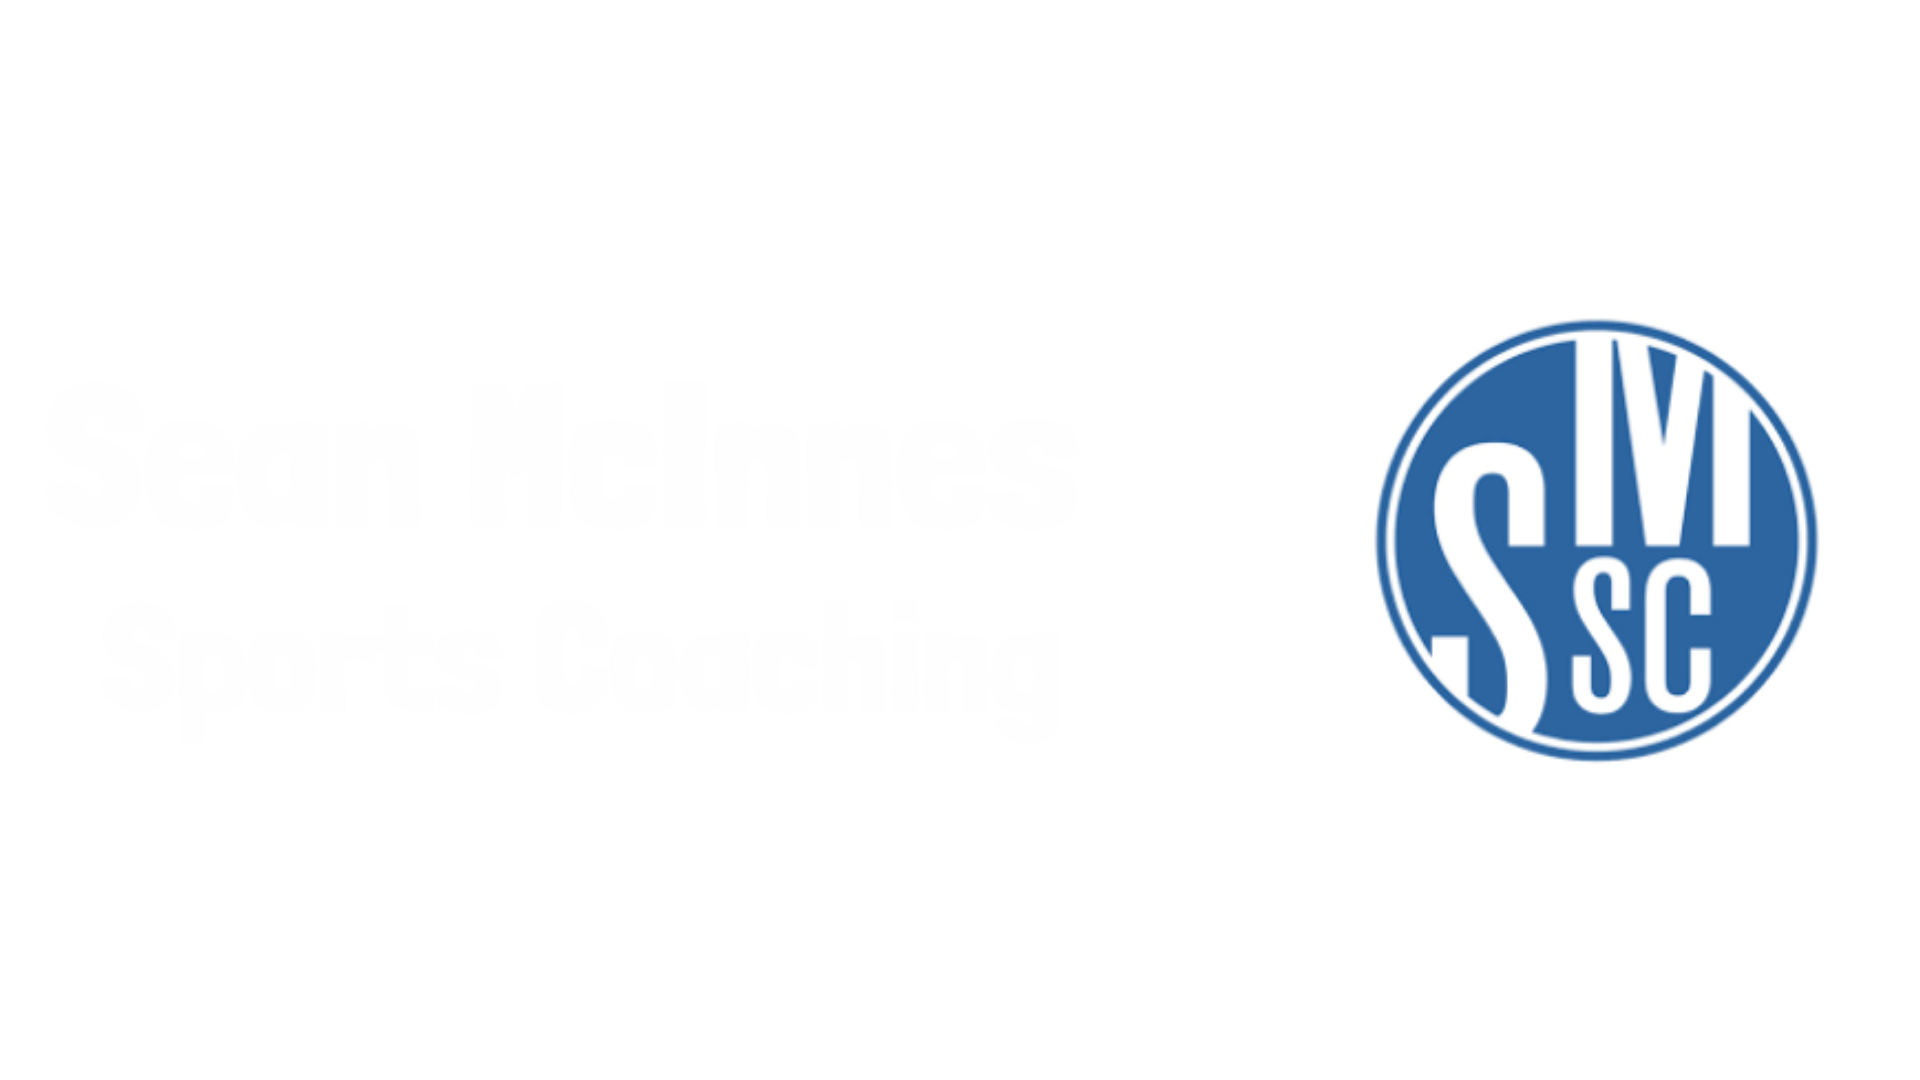 Sean Mcinnes Sports Coaching